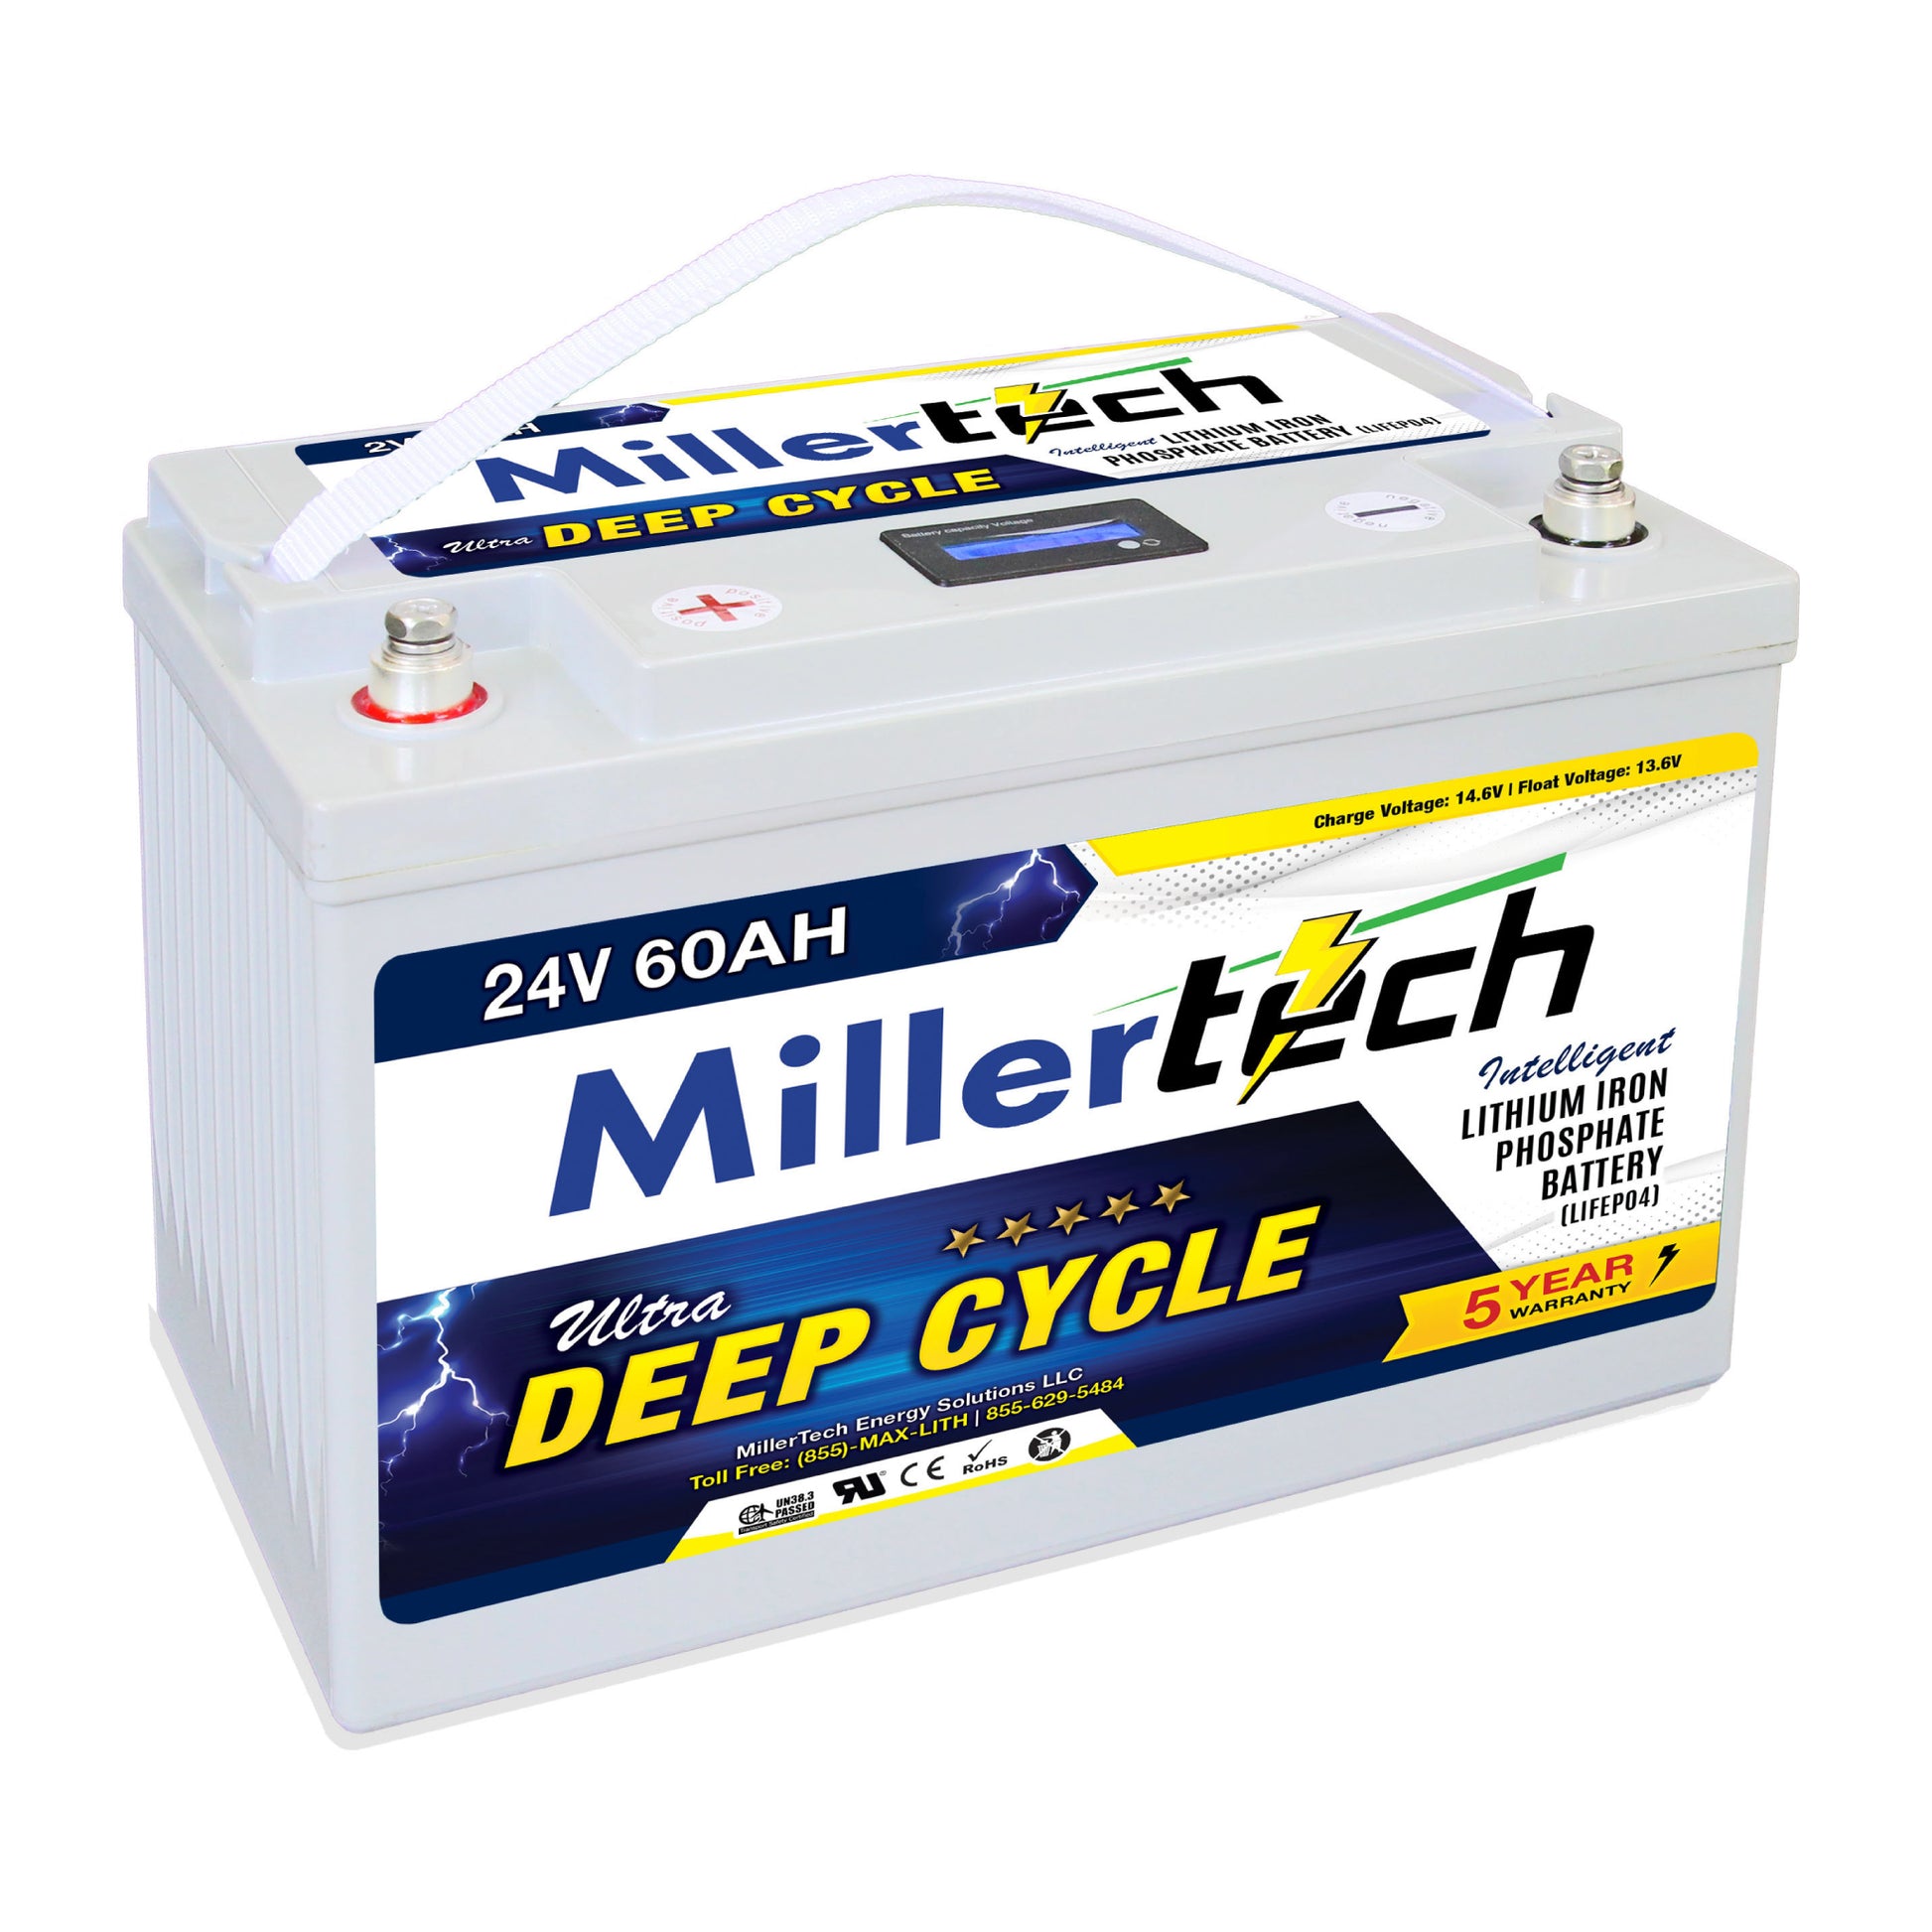 MillerTech 60Ah 24V PREMIUM Lithium Iron Phosphate (LiFePO4) Smart Battery  (2460L)